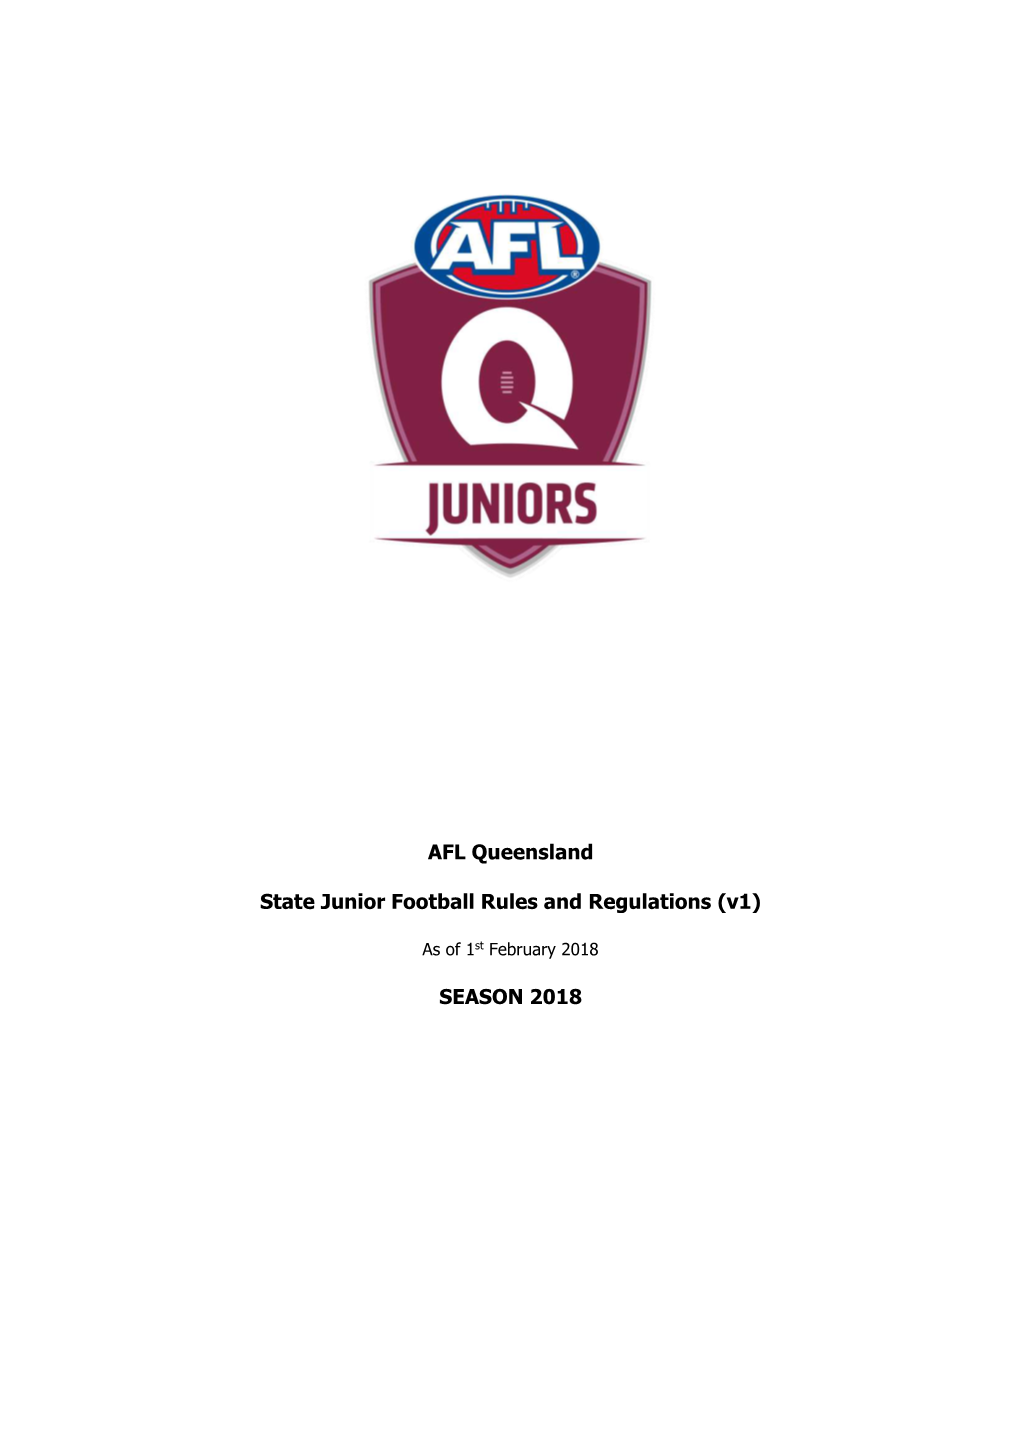 AFL Queensland State Junior Football Rules and Regulations (V1